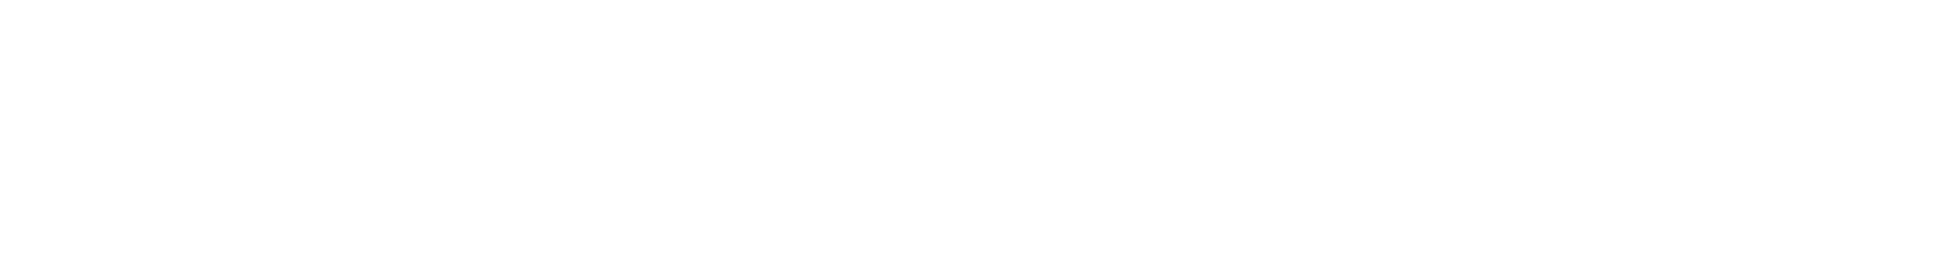 4D People logo large